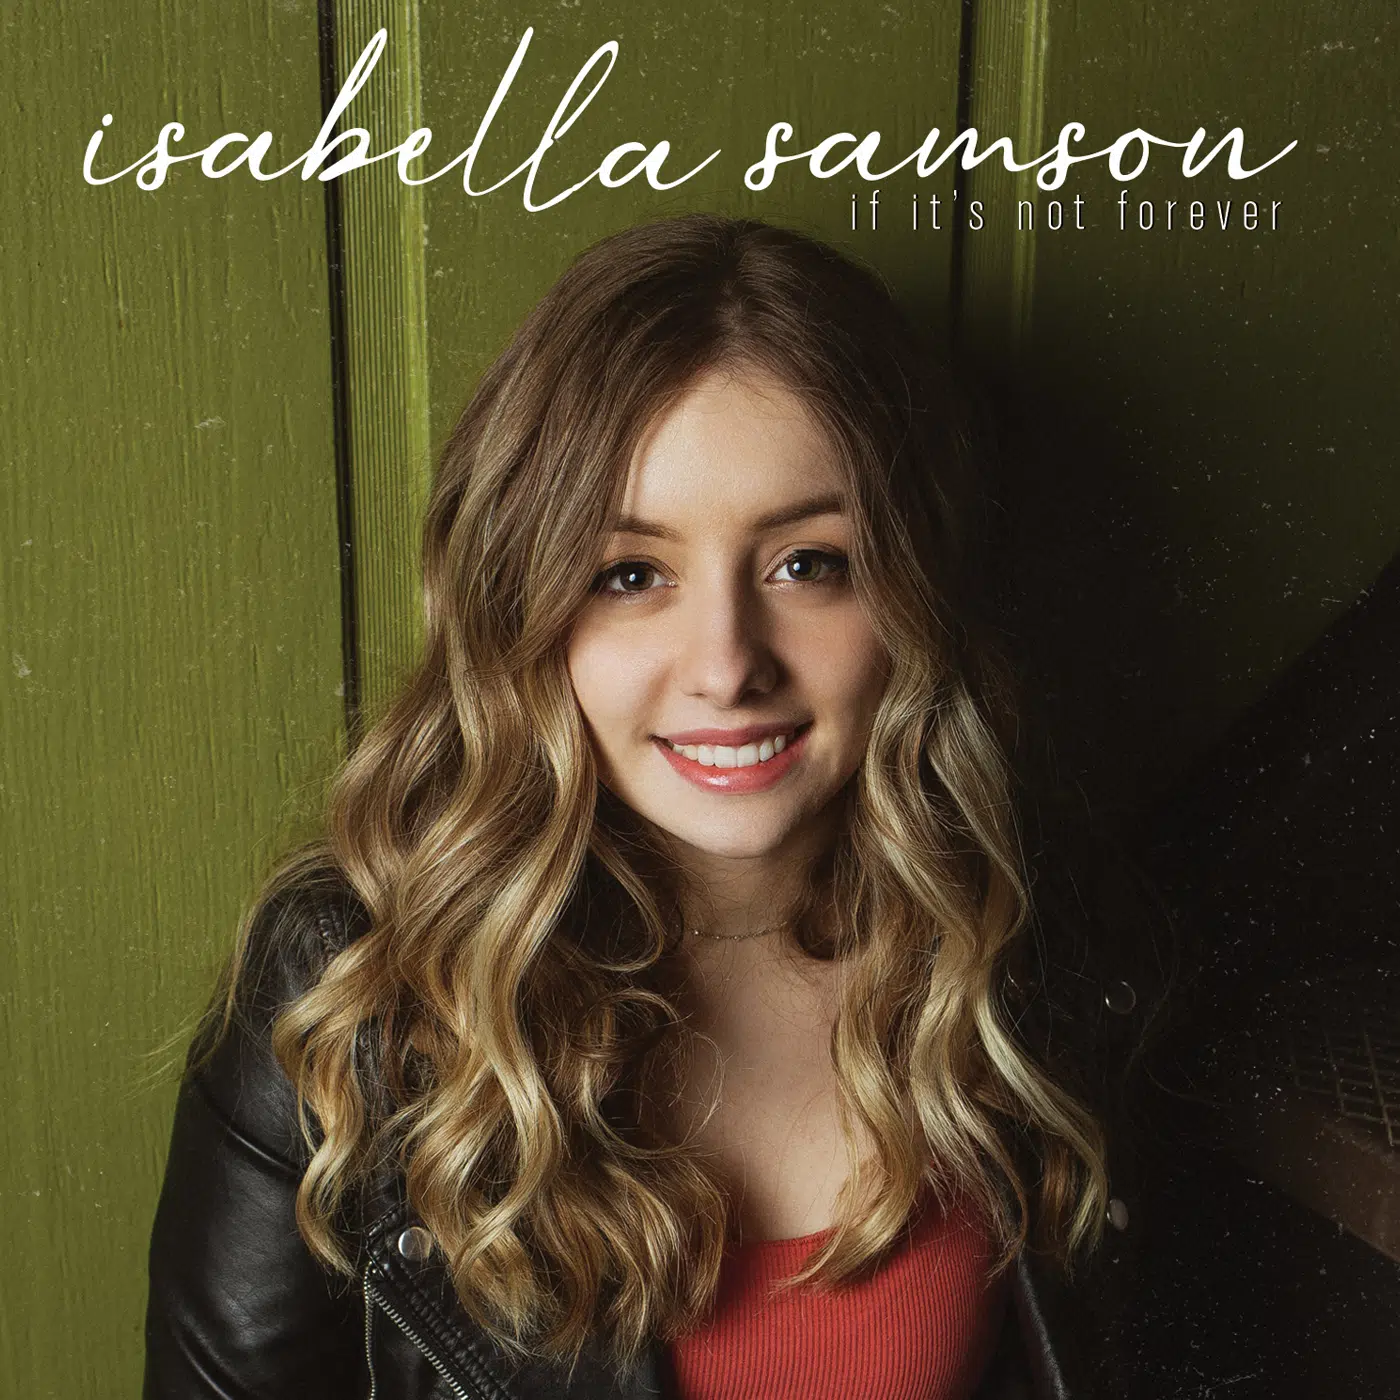 July 18 6:30pm - Isabella Samson